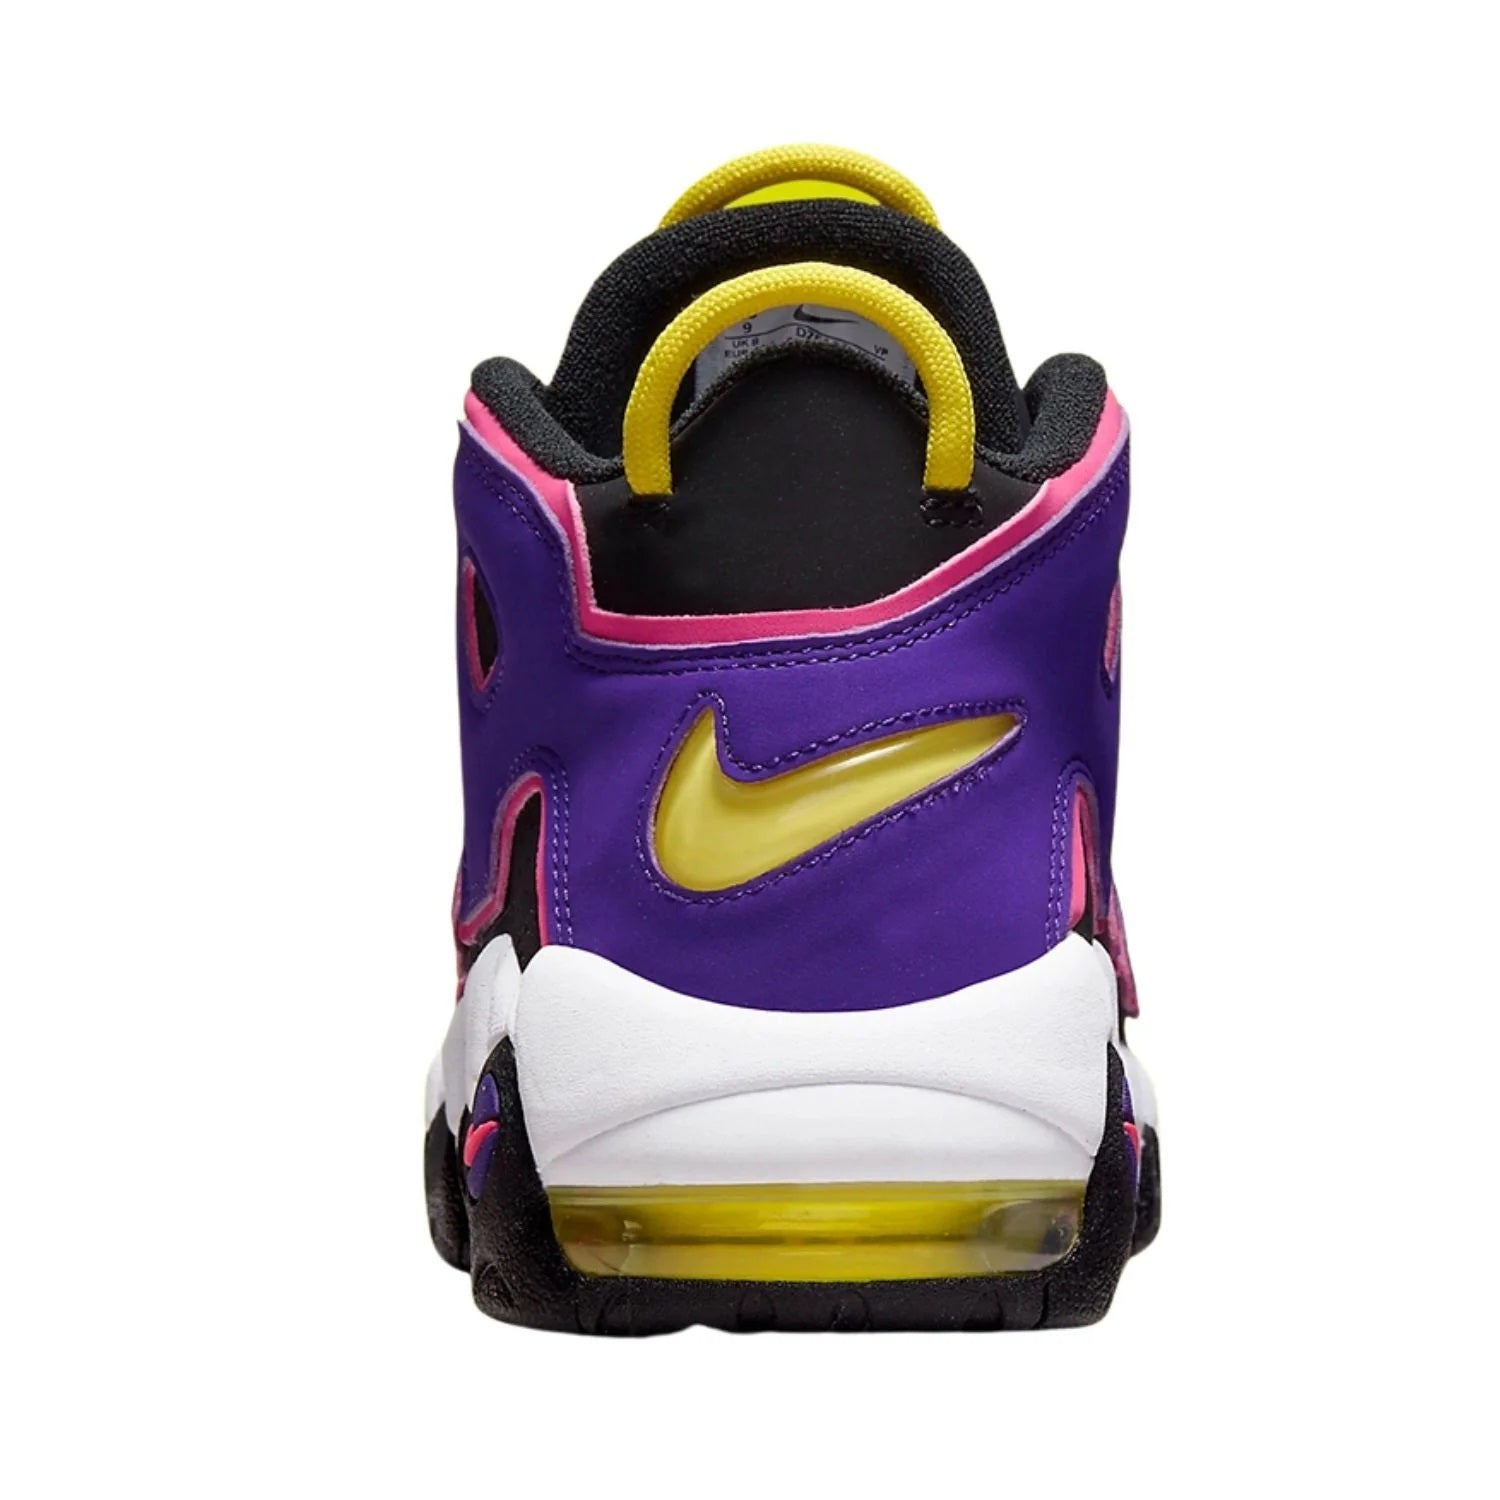 Nike Mens Air More Uptempo 96 Basketball Shoes,Black/Multi/Court Purple